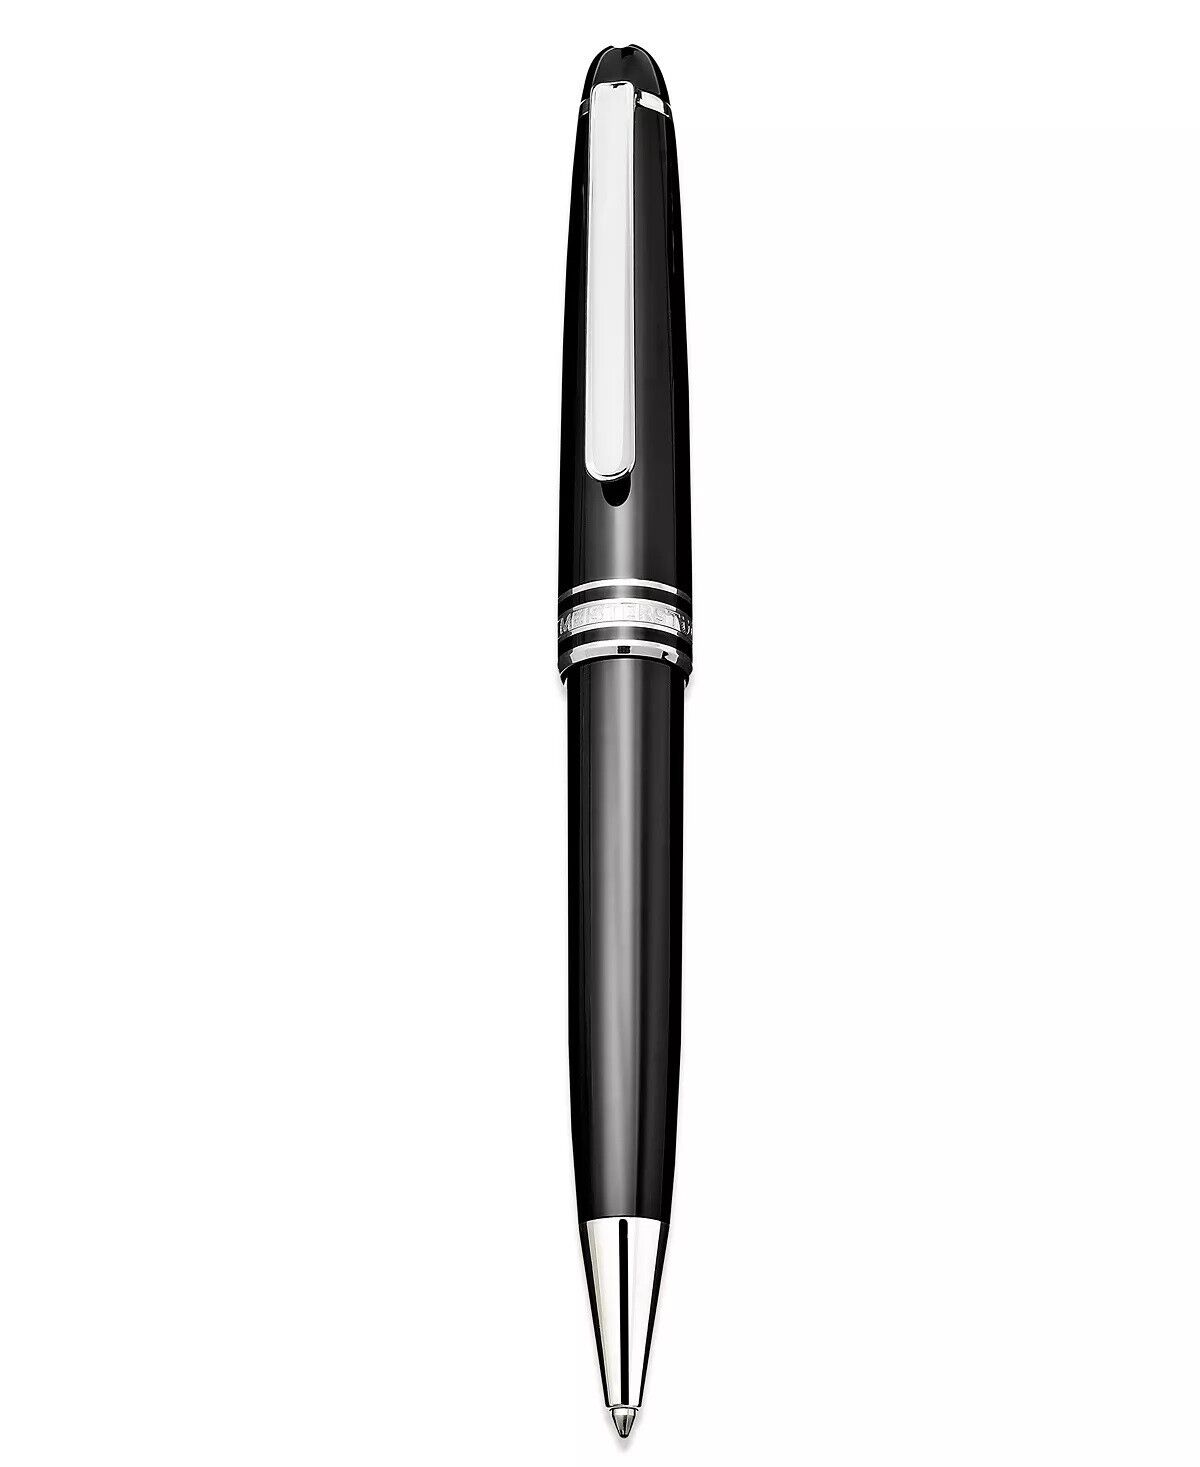 New Authentic Montblanc Platinum Meisterstuck Ballpoint Pen President Day Sale